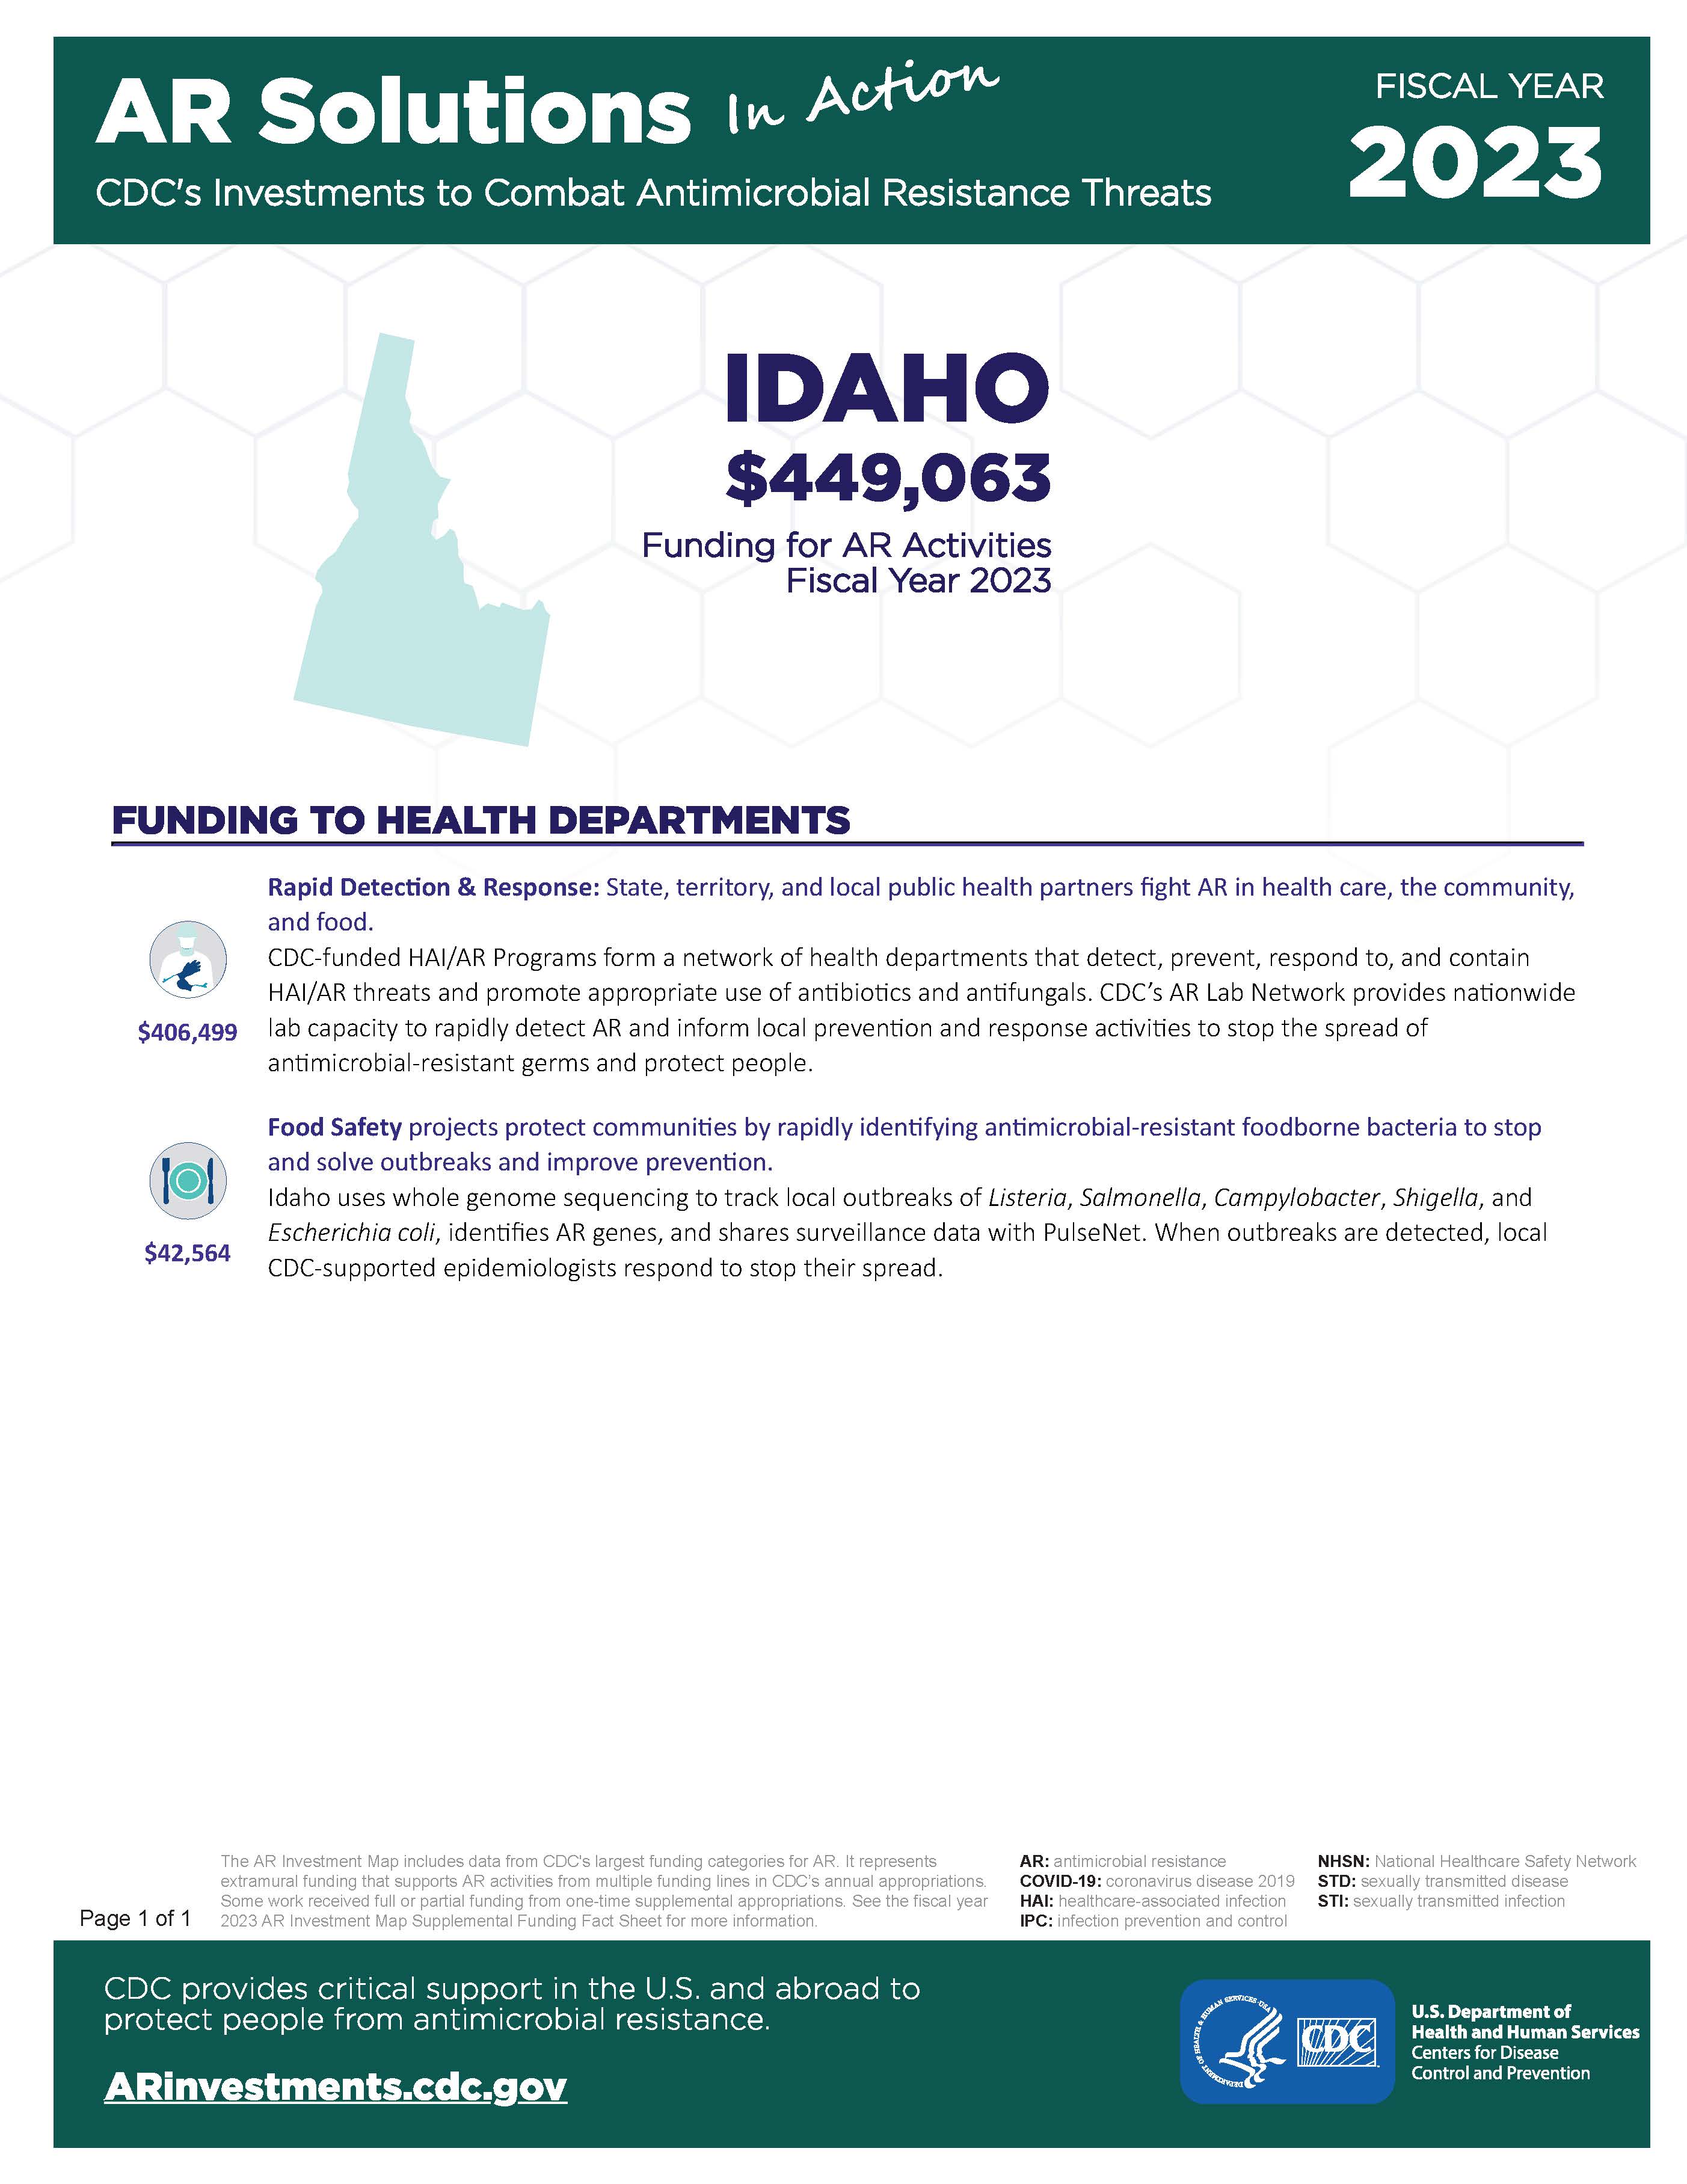 View Factsheet for Idaho